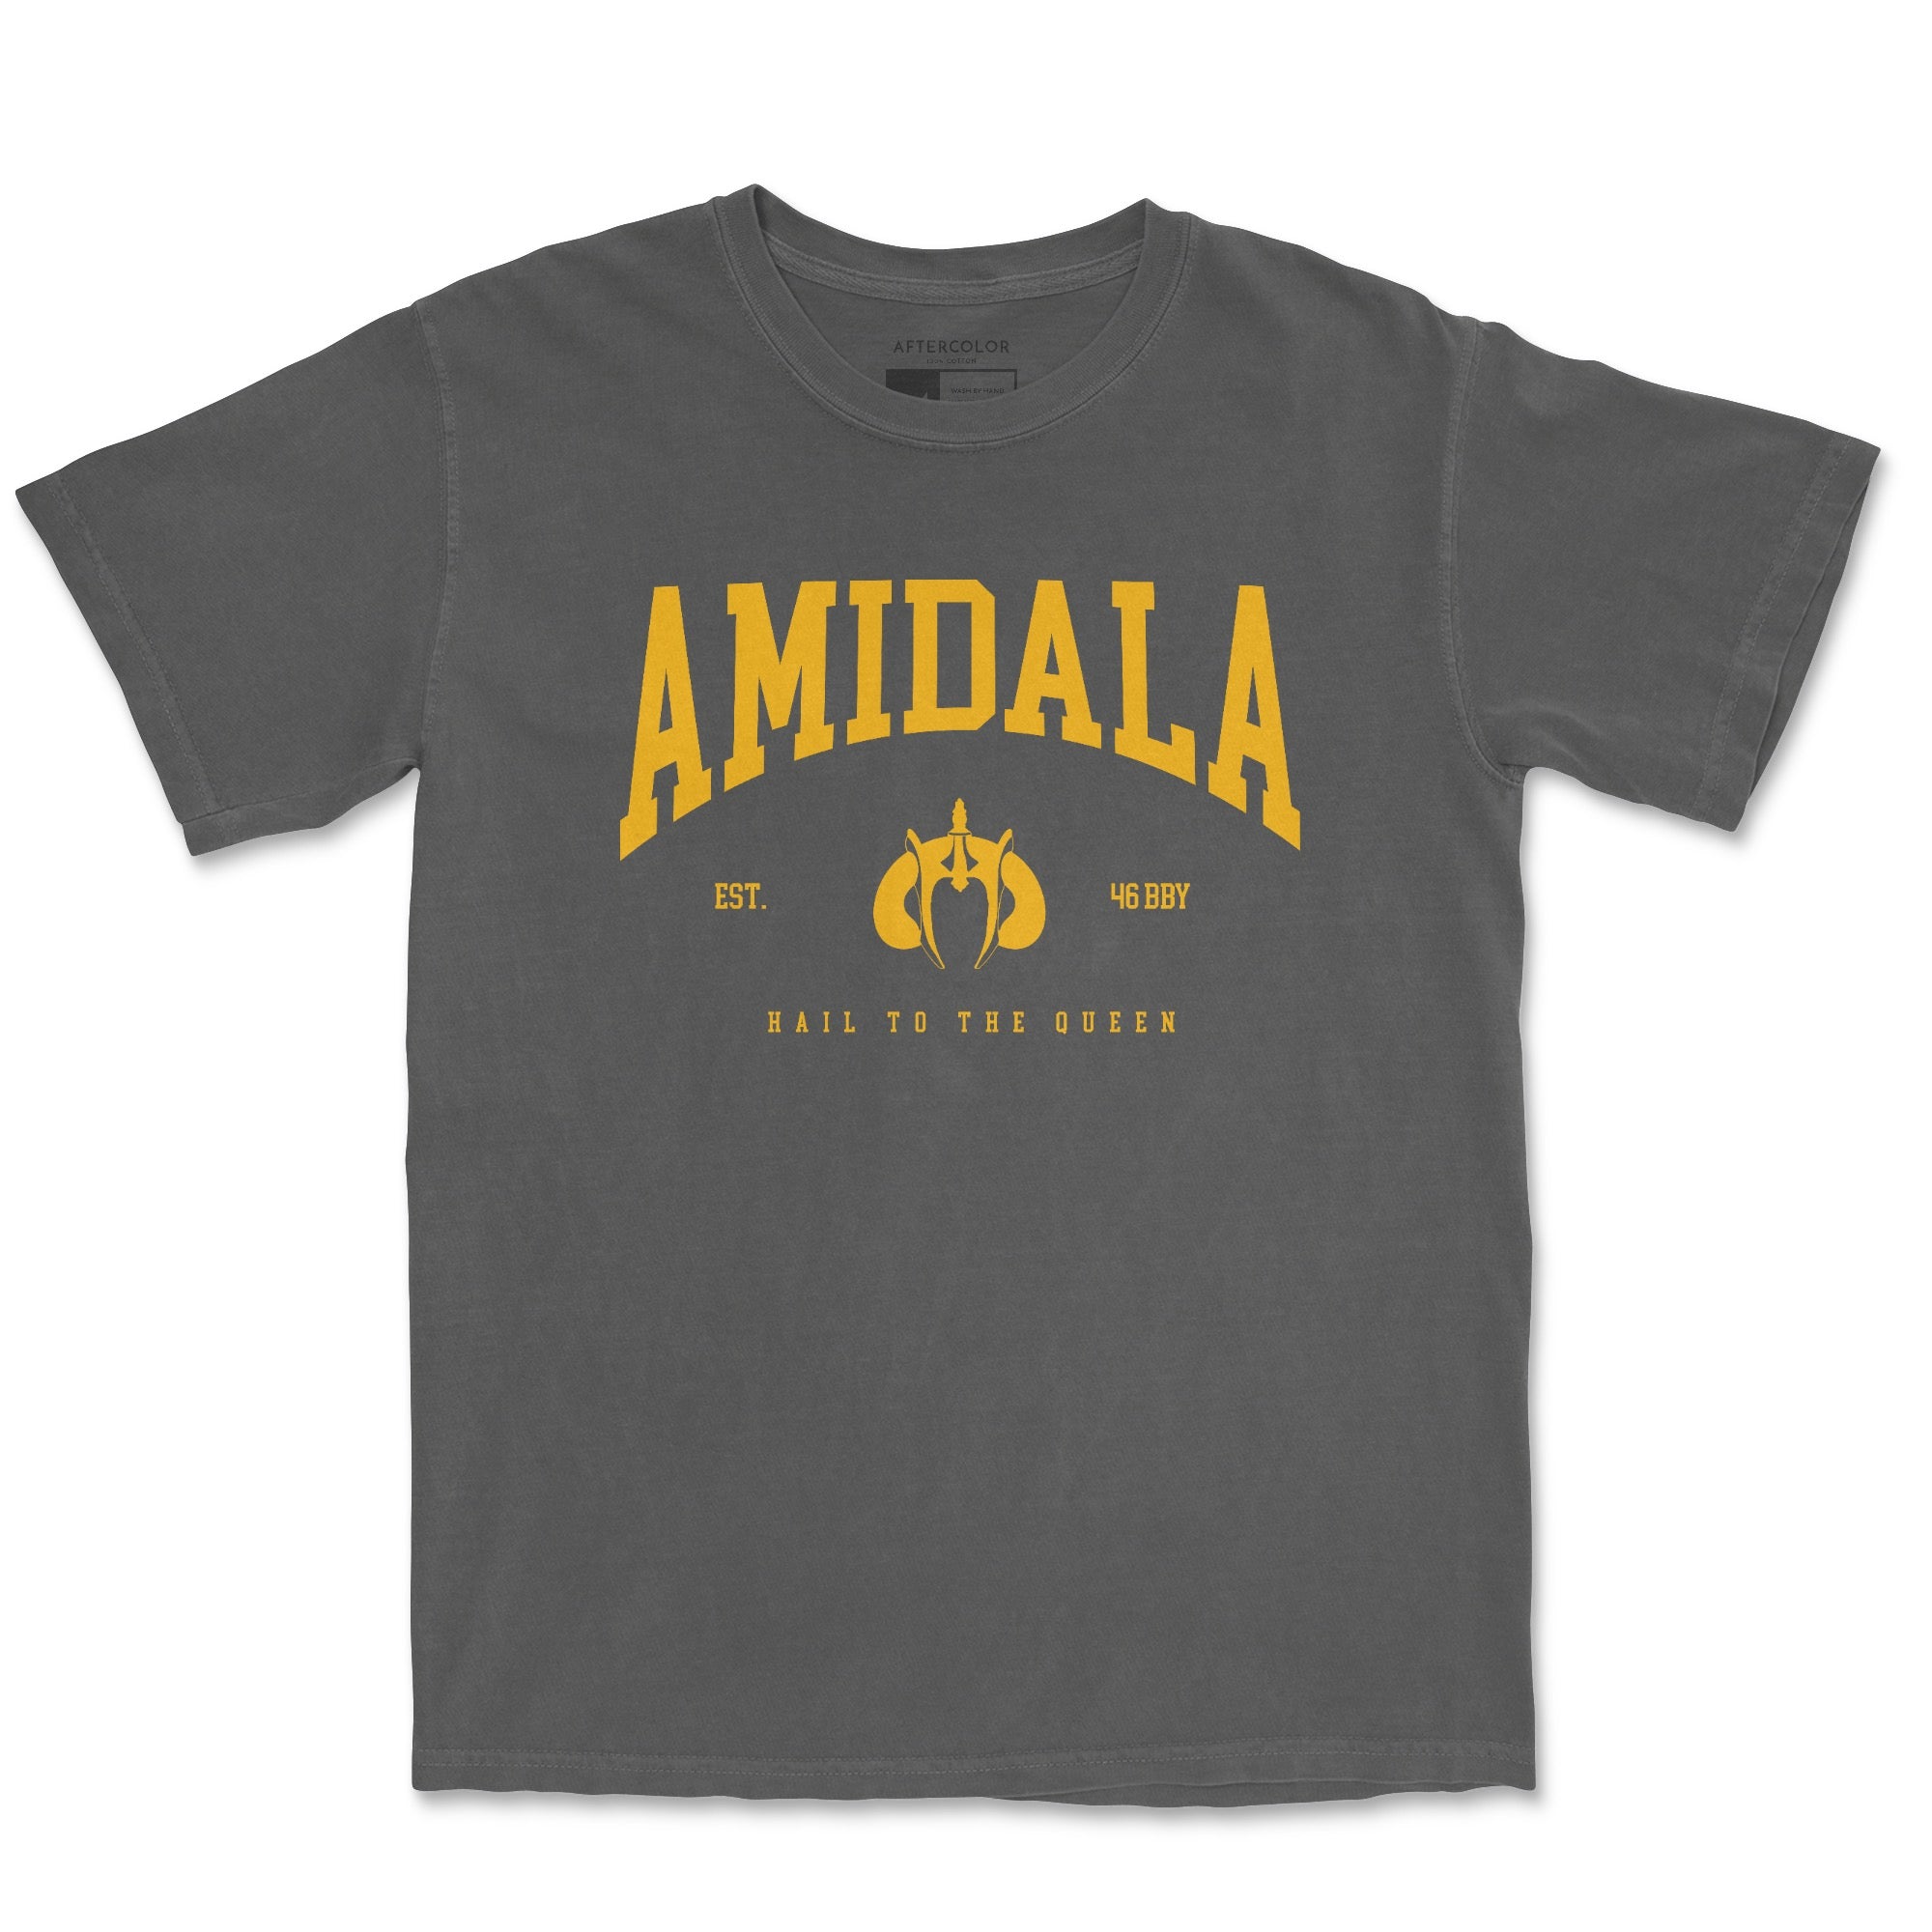 Amidala Garment Dyed Tee